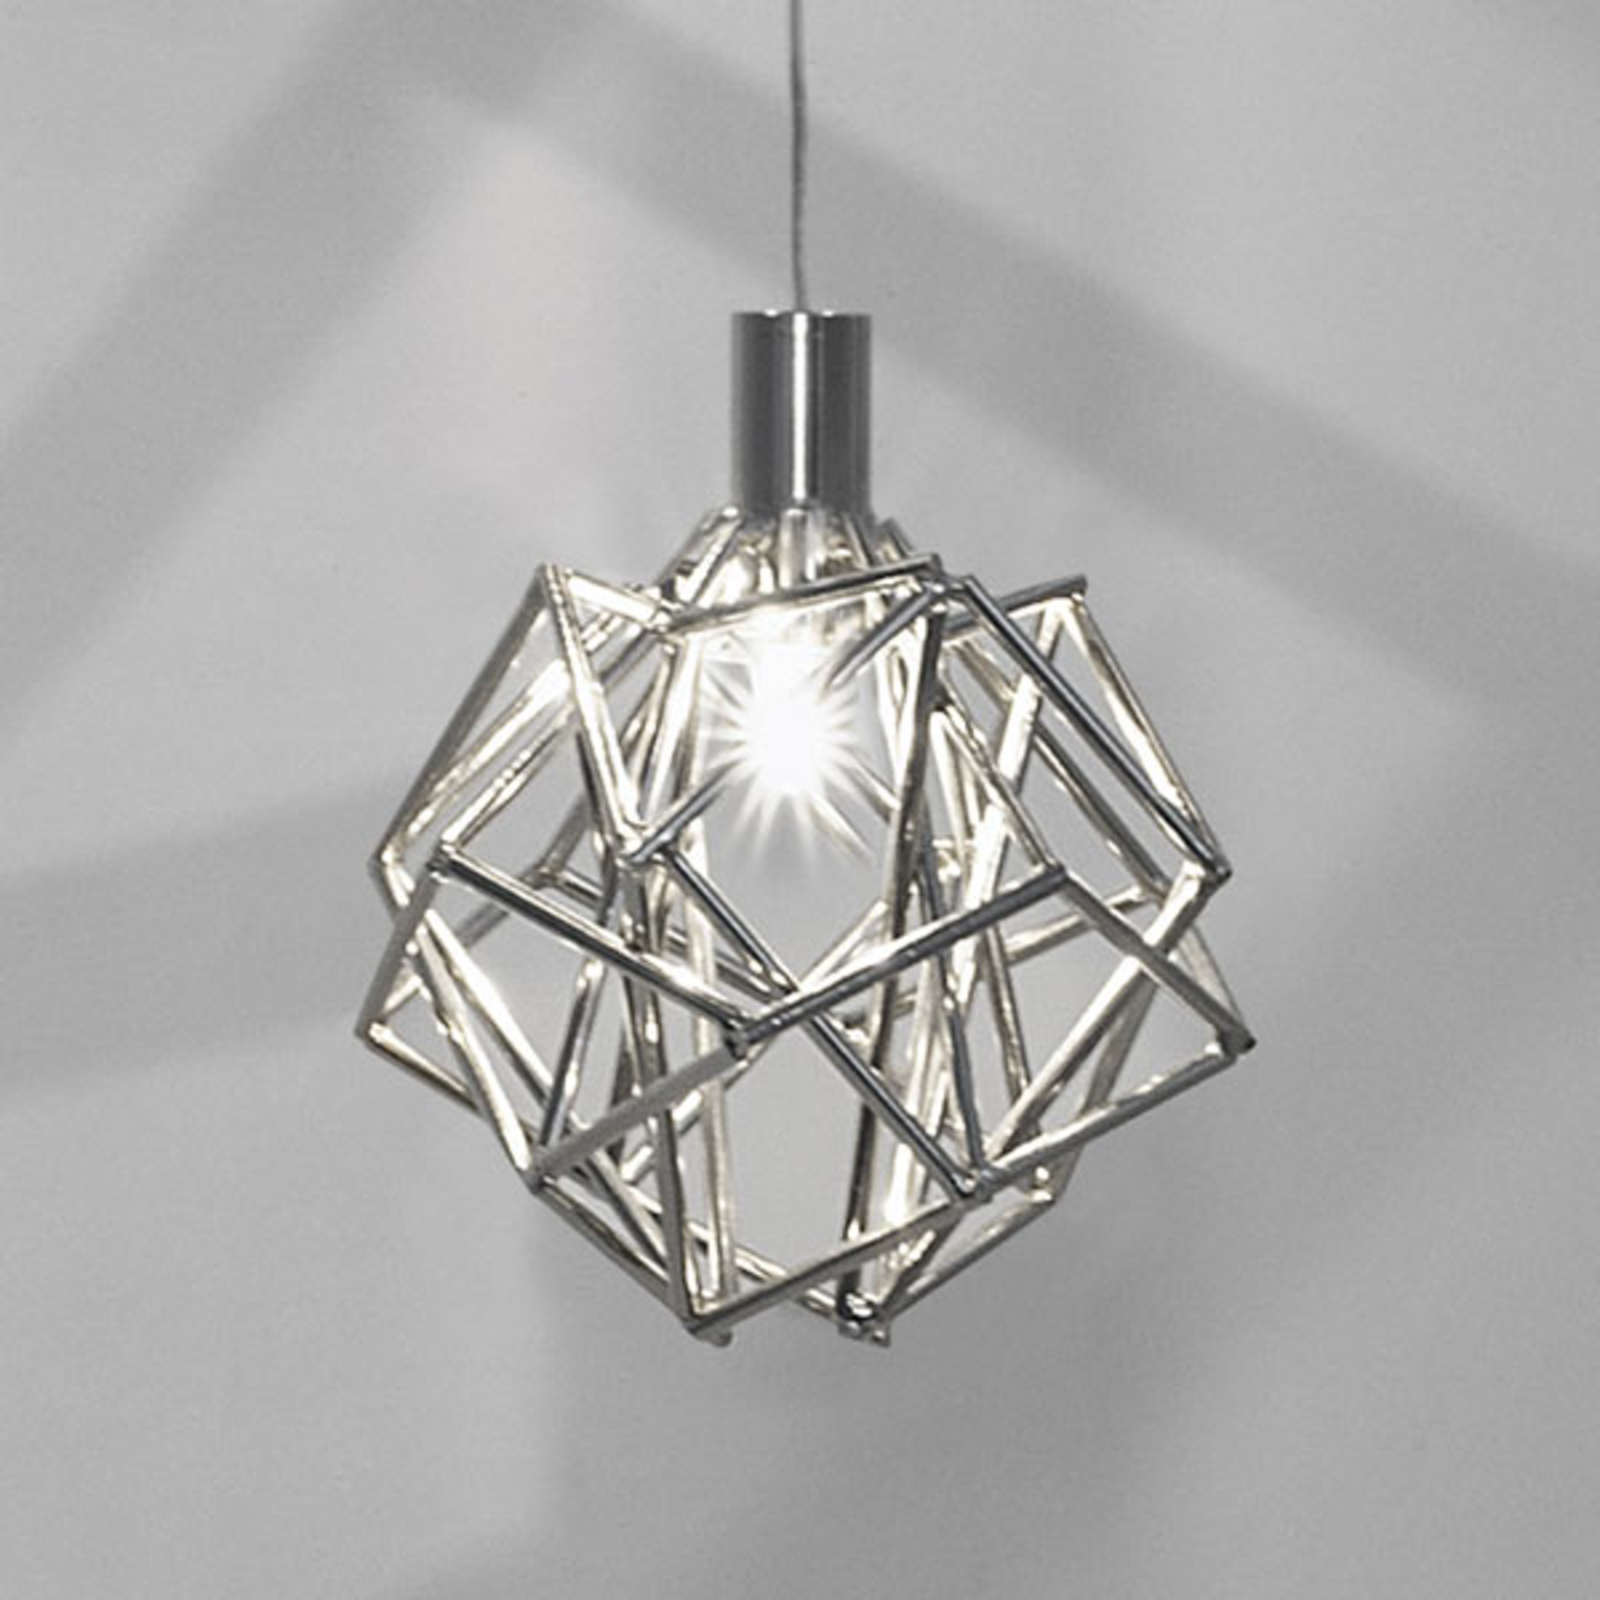 Ongewijzigd Markeer dozijn Terzani Etoile design-hanglamp 1-lamp | Lampen24.nl